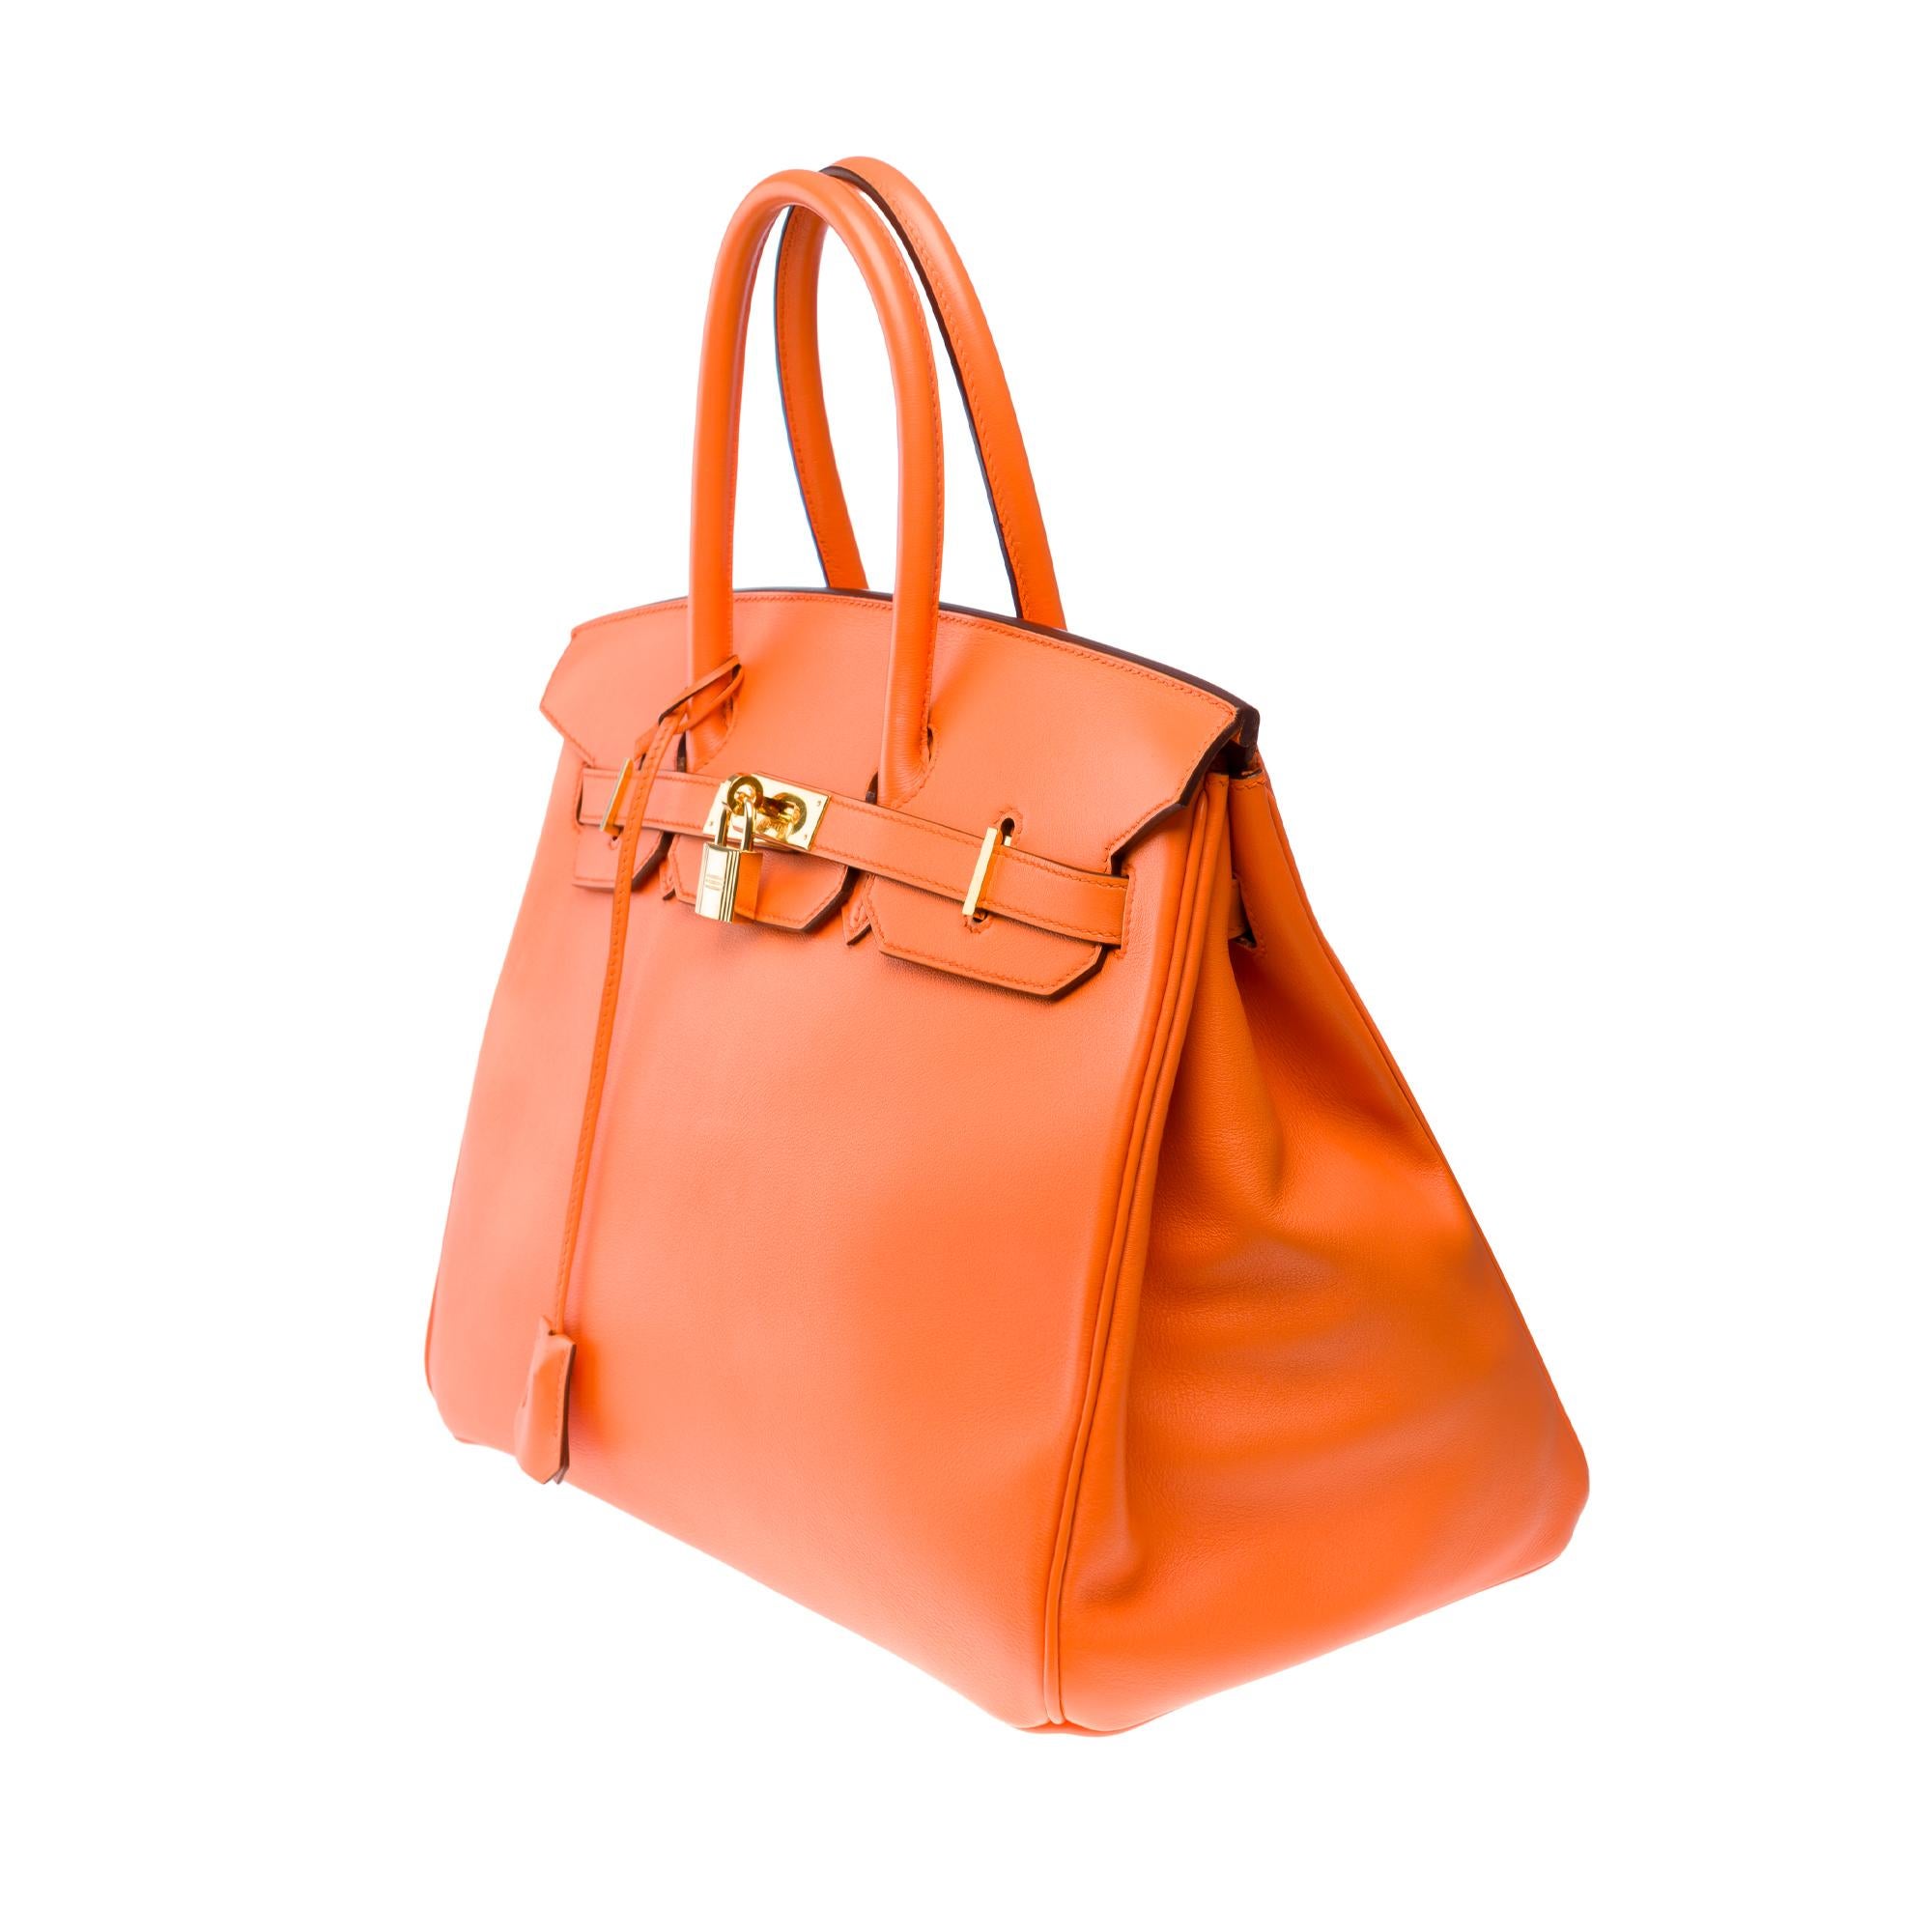 Amazing Hermès Birkin 35 handbag in Orange Swift Calf leather, GHW 1